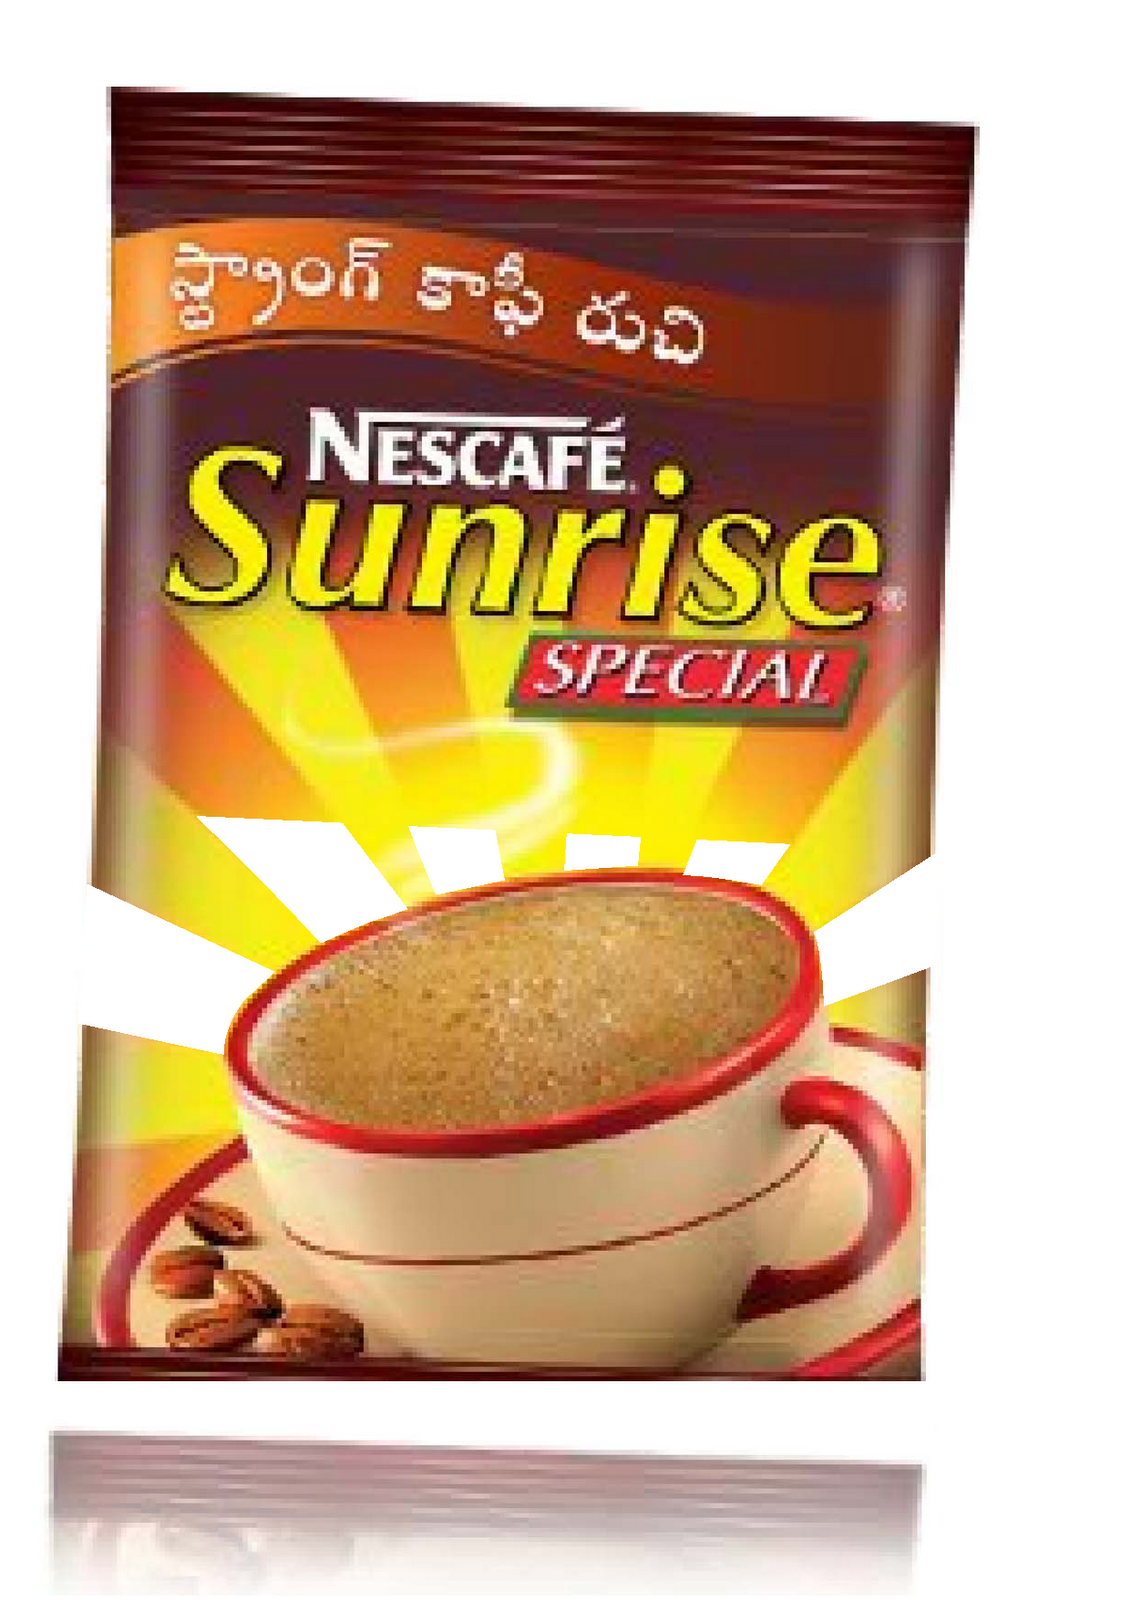 Кофе Нескафе Special. Sunrise кофе. Nescafe Sunrise. Sunrise кофейня. Коламбия санрайз